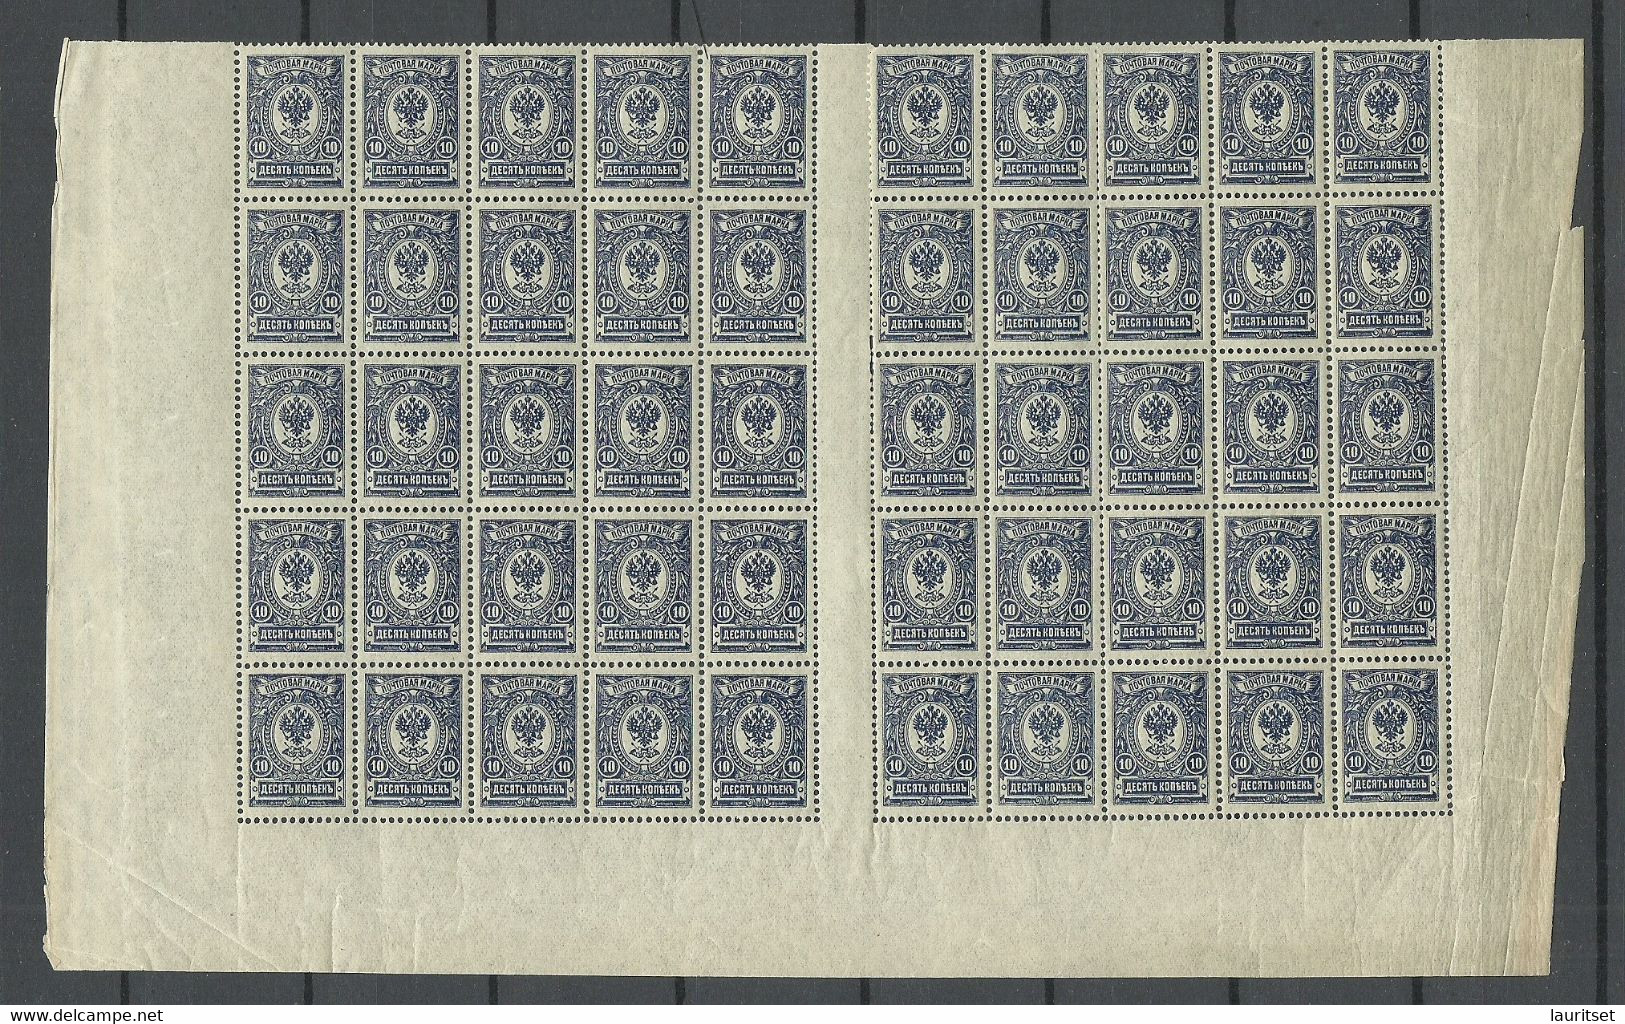 RUSSIA Russland 1911 Michel 69 I A B (dunkelviolettultramarin) As Lower Half Of The Sheet 50 Stamps MNH NB! Separations! - Neufs